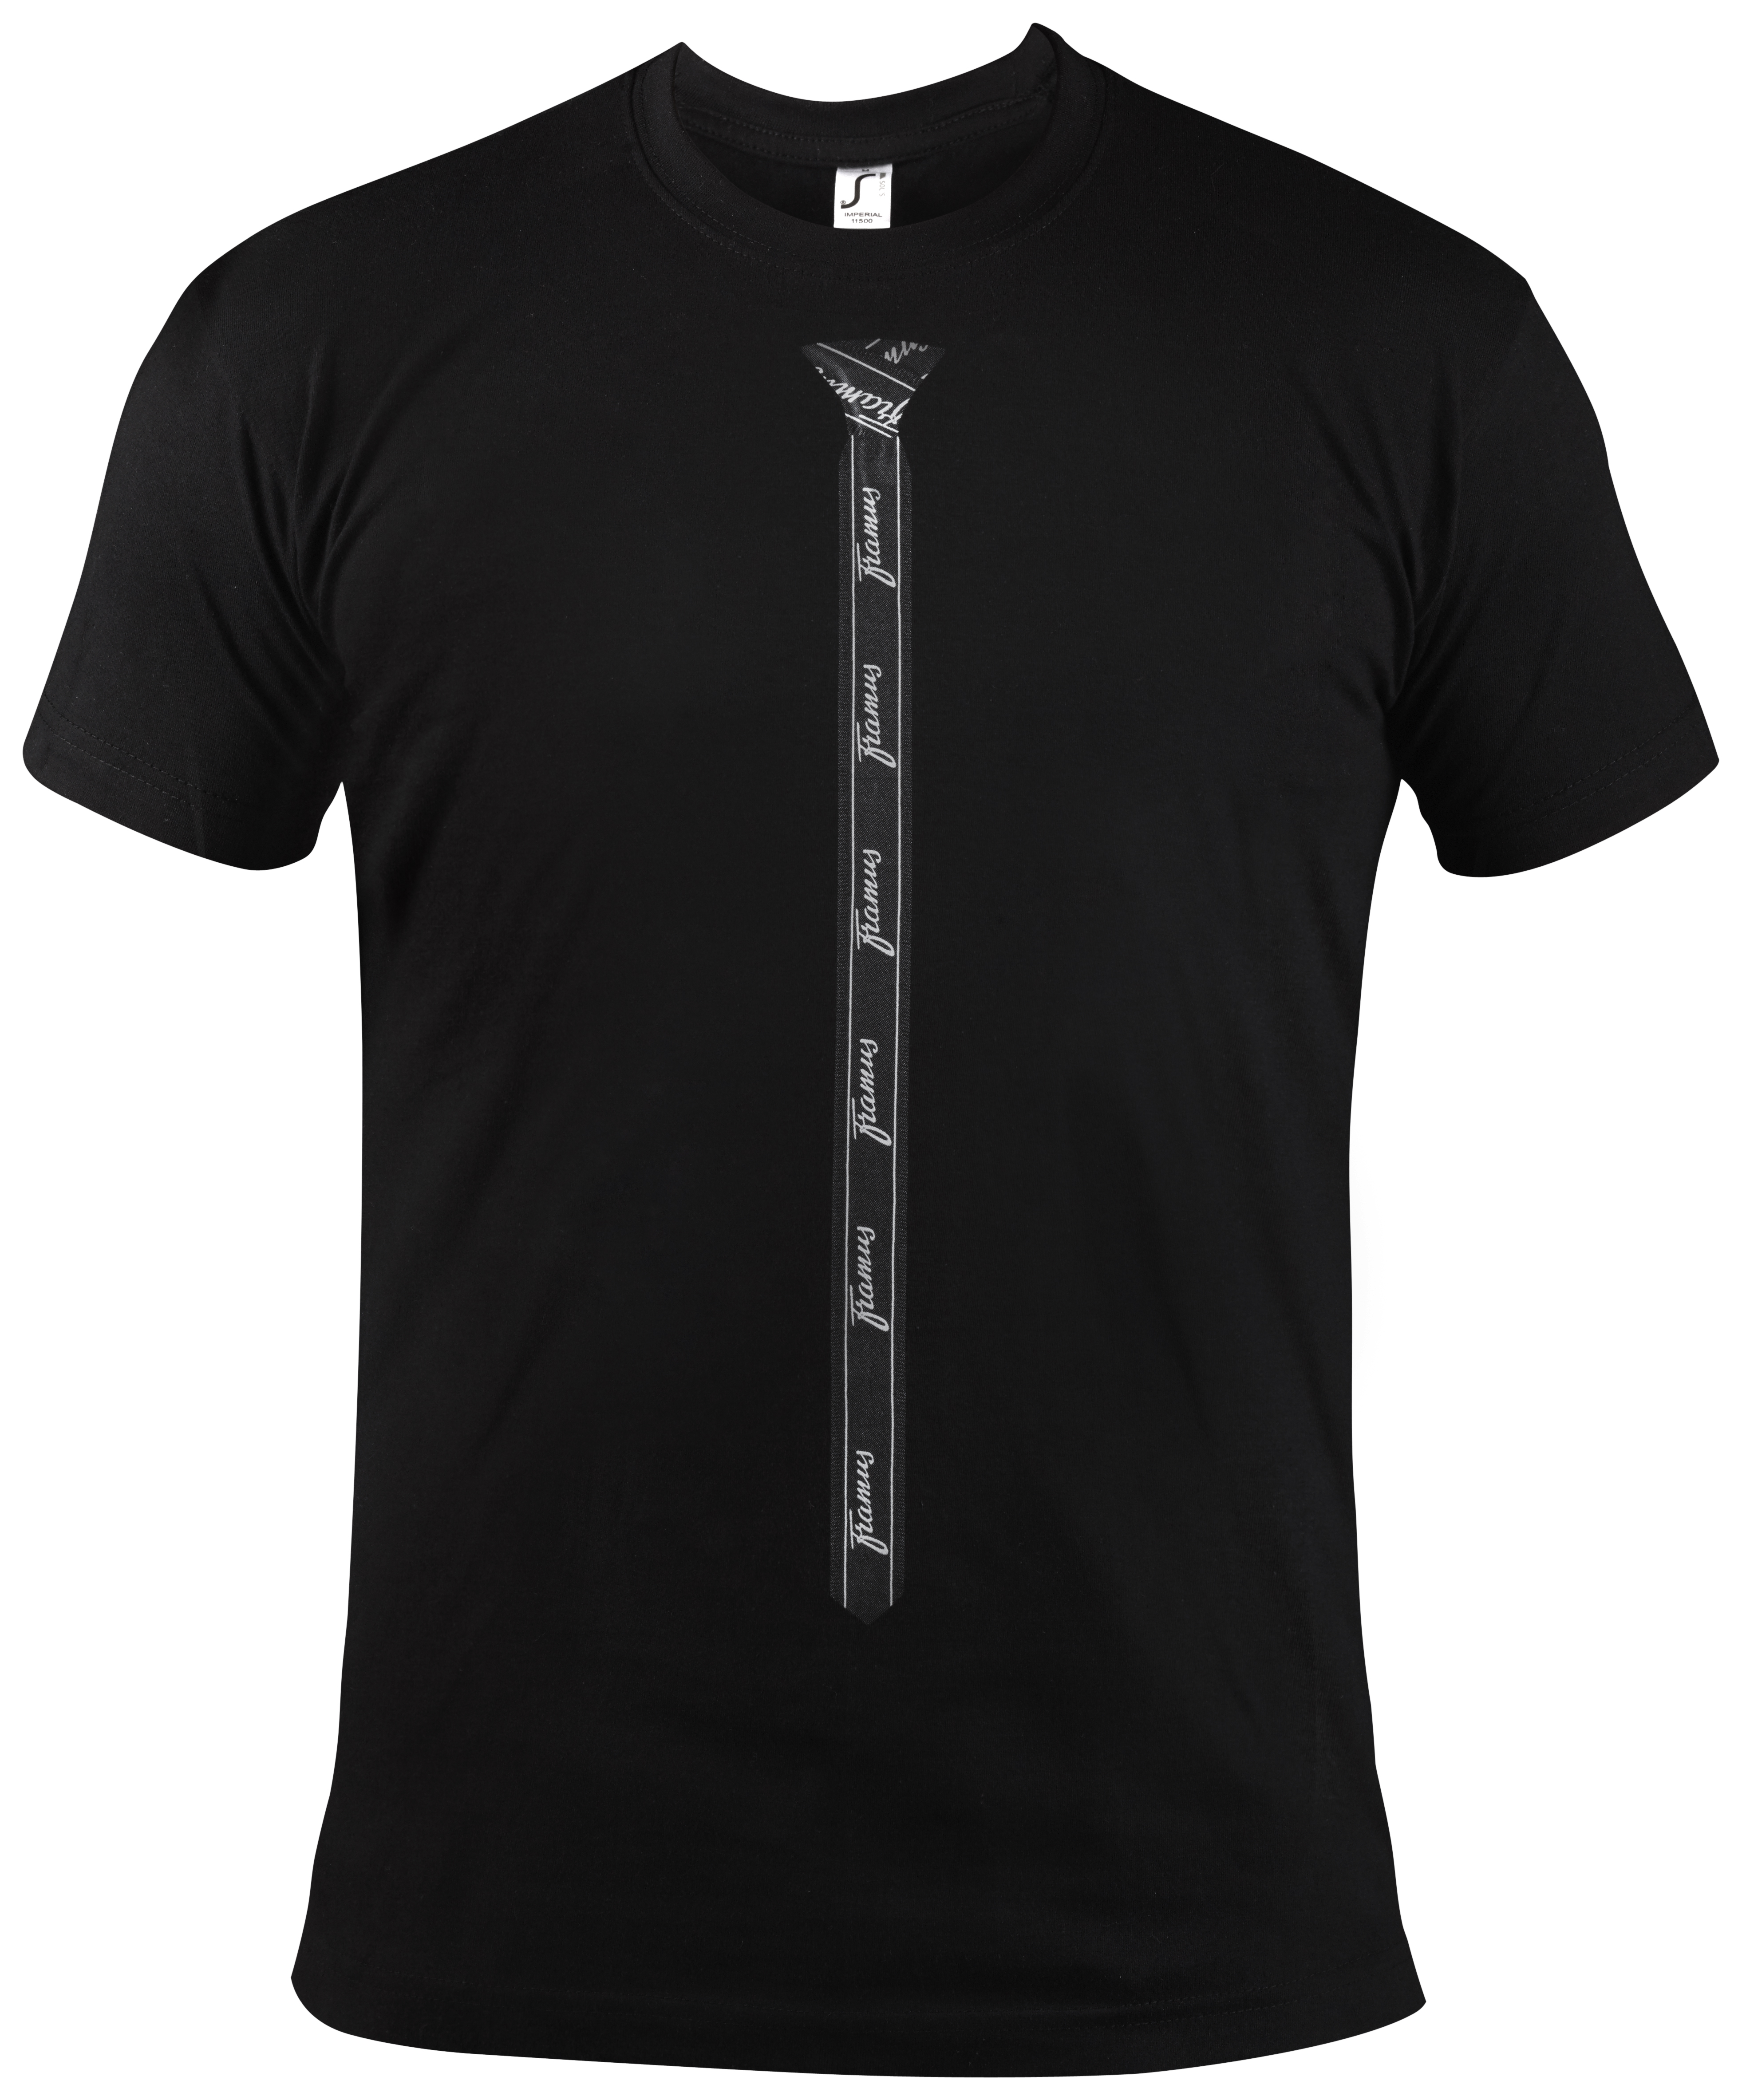 Framus Promo - Tie - T-Shirt - Female / Size XL